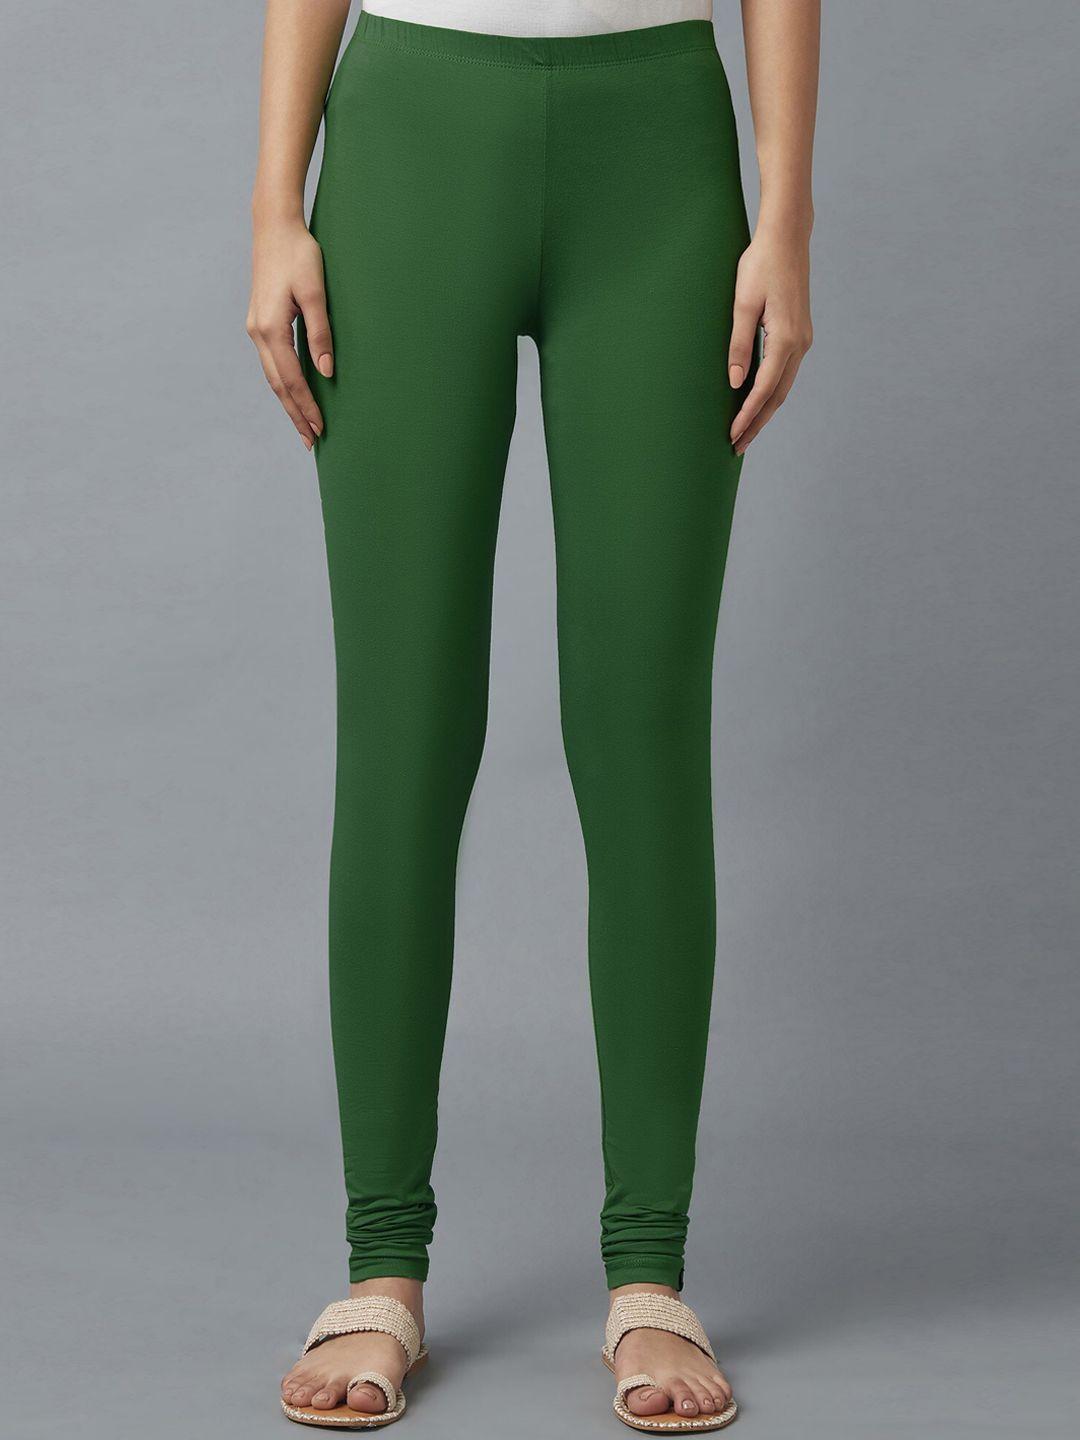 elleven women green solid churidar length leggings